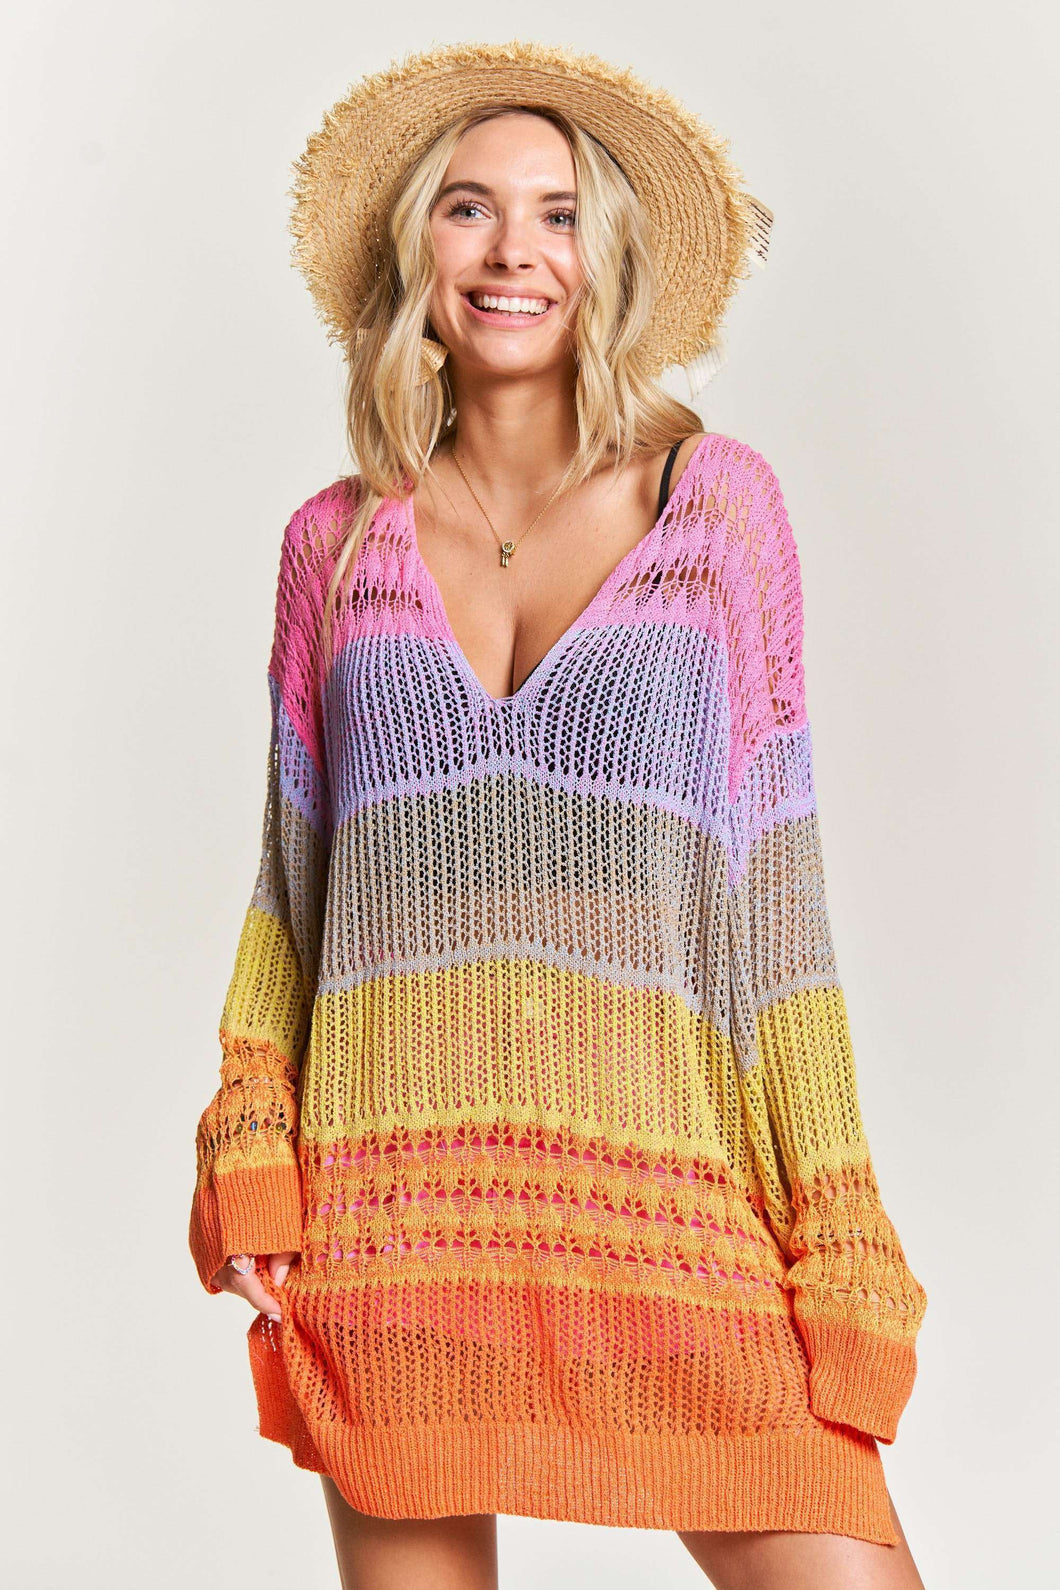 Color Me Happy Crochet Tunic